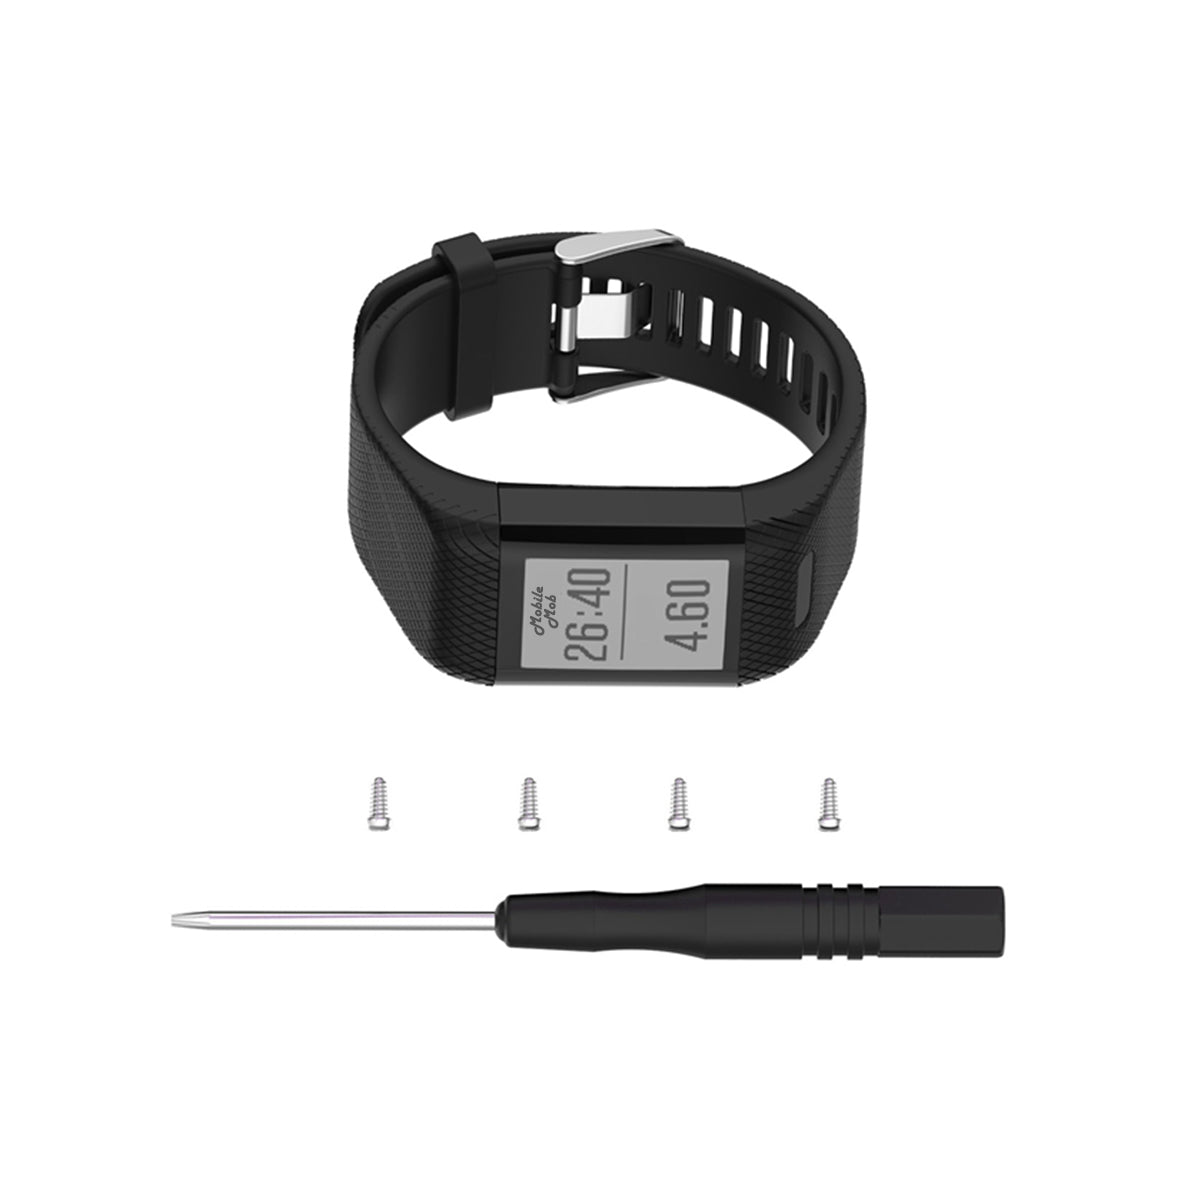 Band for Garmin vivosmart HR, Silicone Strap Replacement Wristband for  Garmin vivosmart HR(No Tracker)